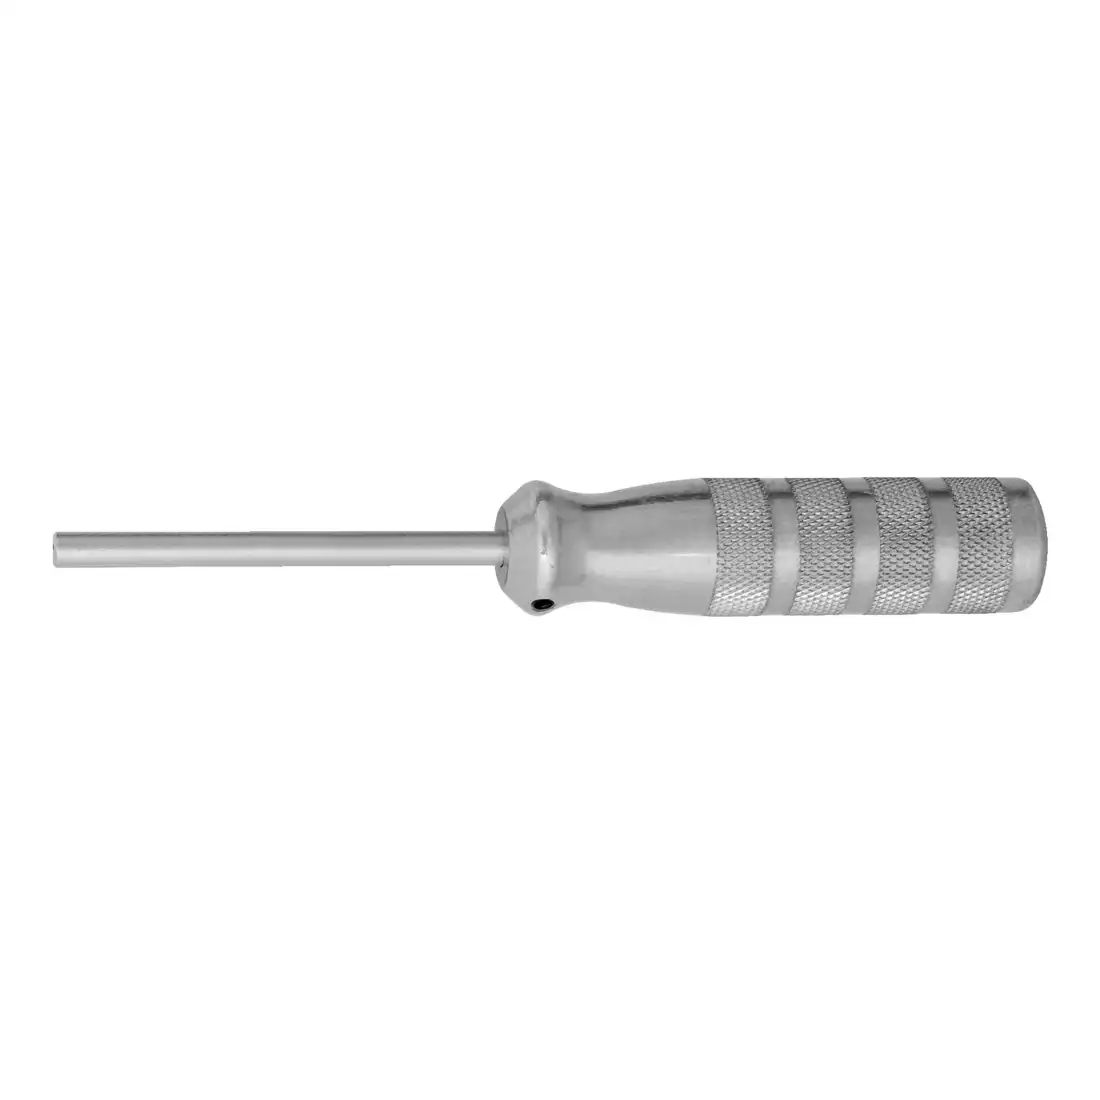 UNIOR socket screwdriver for square spoke nipples